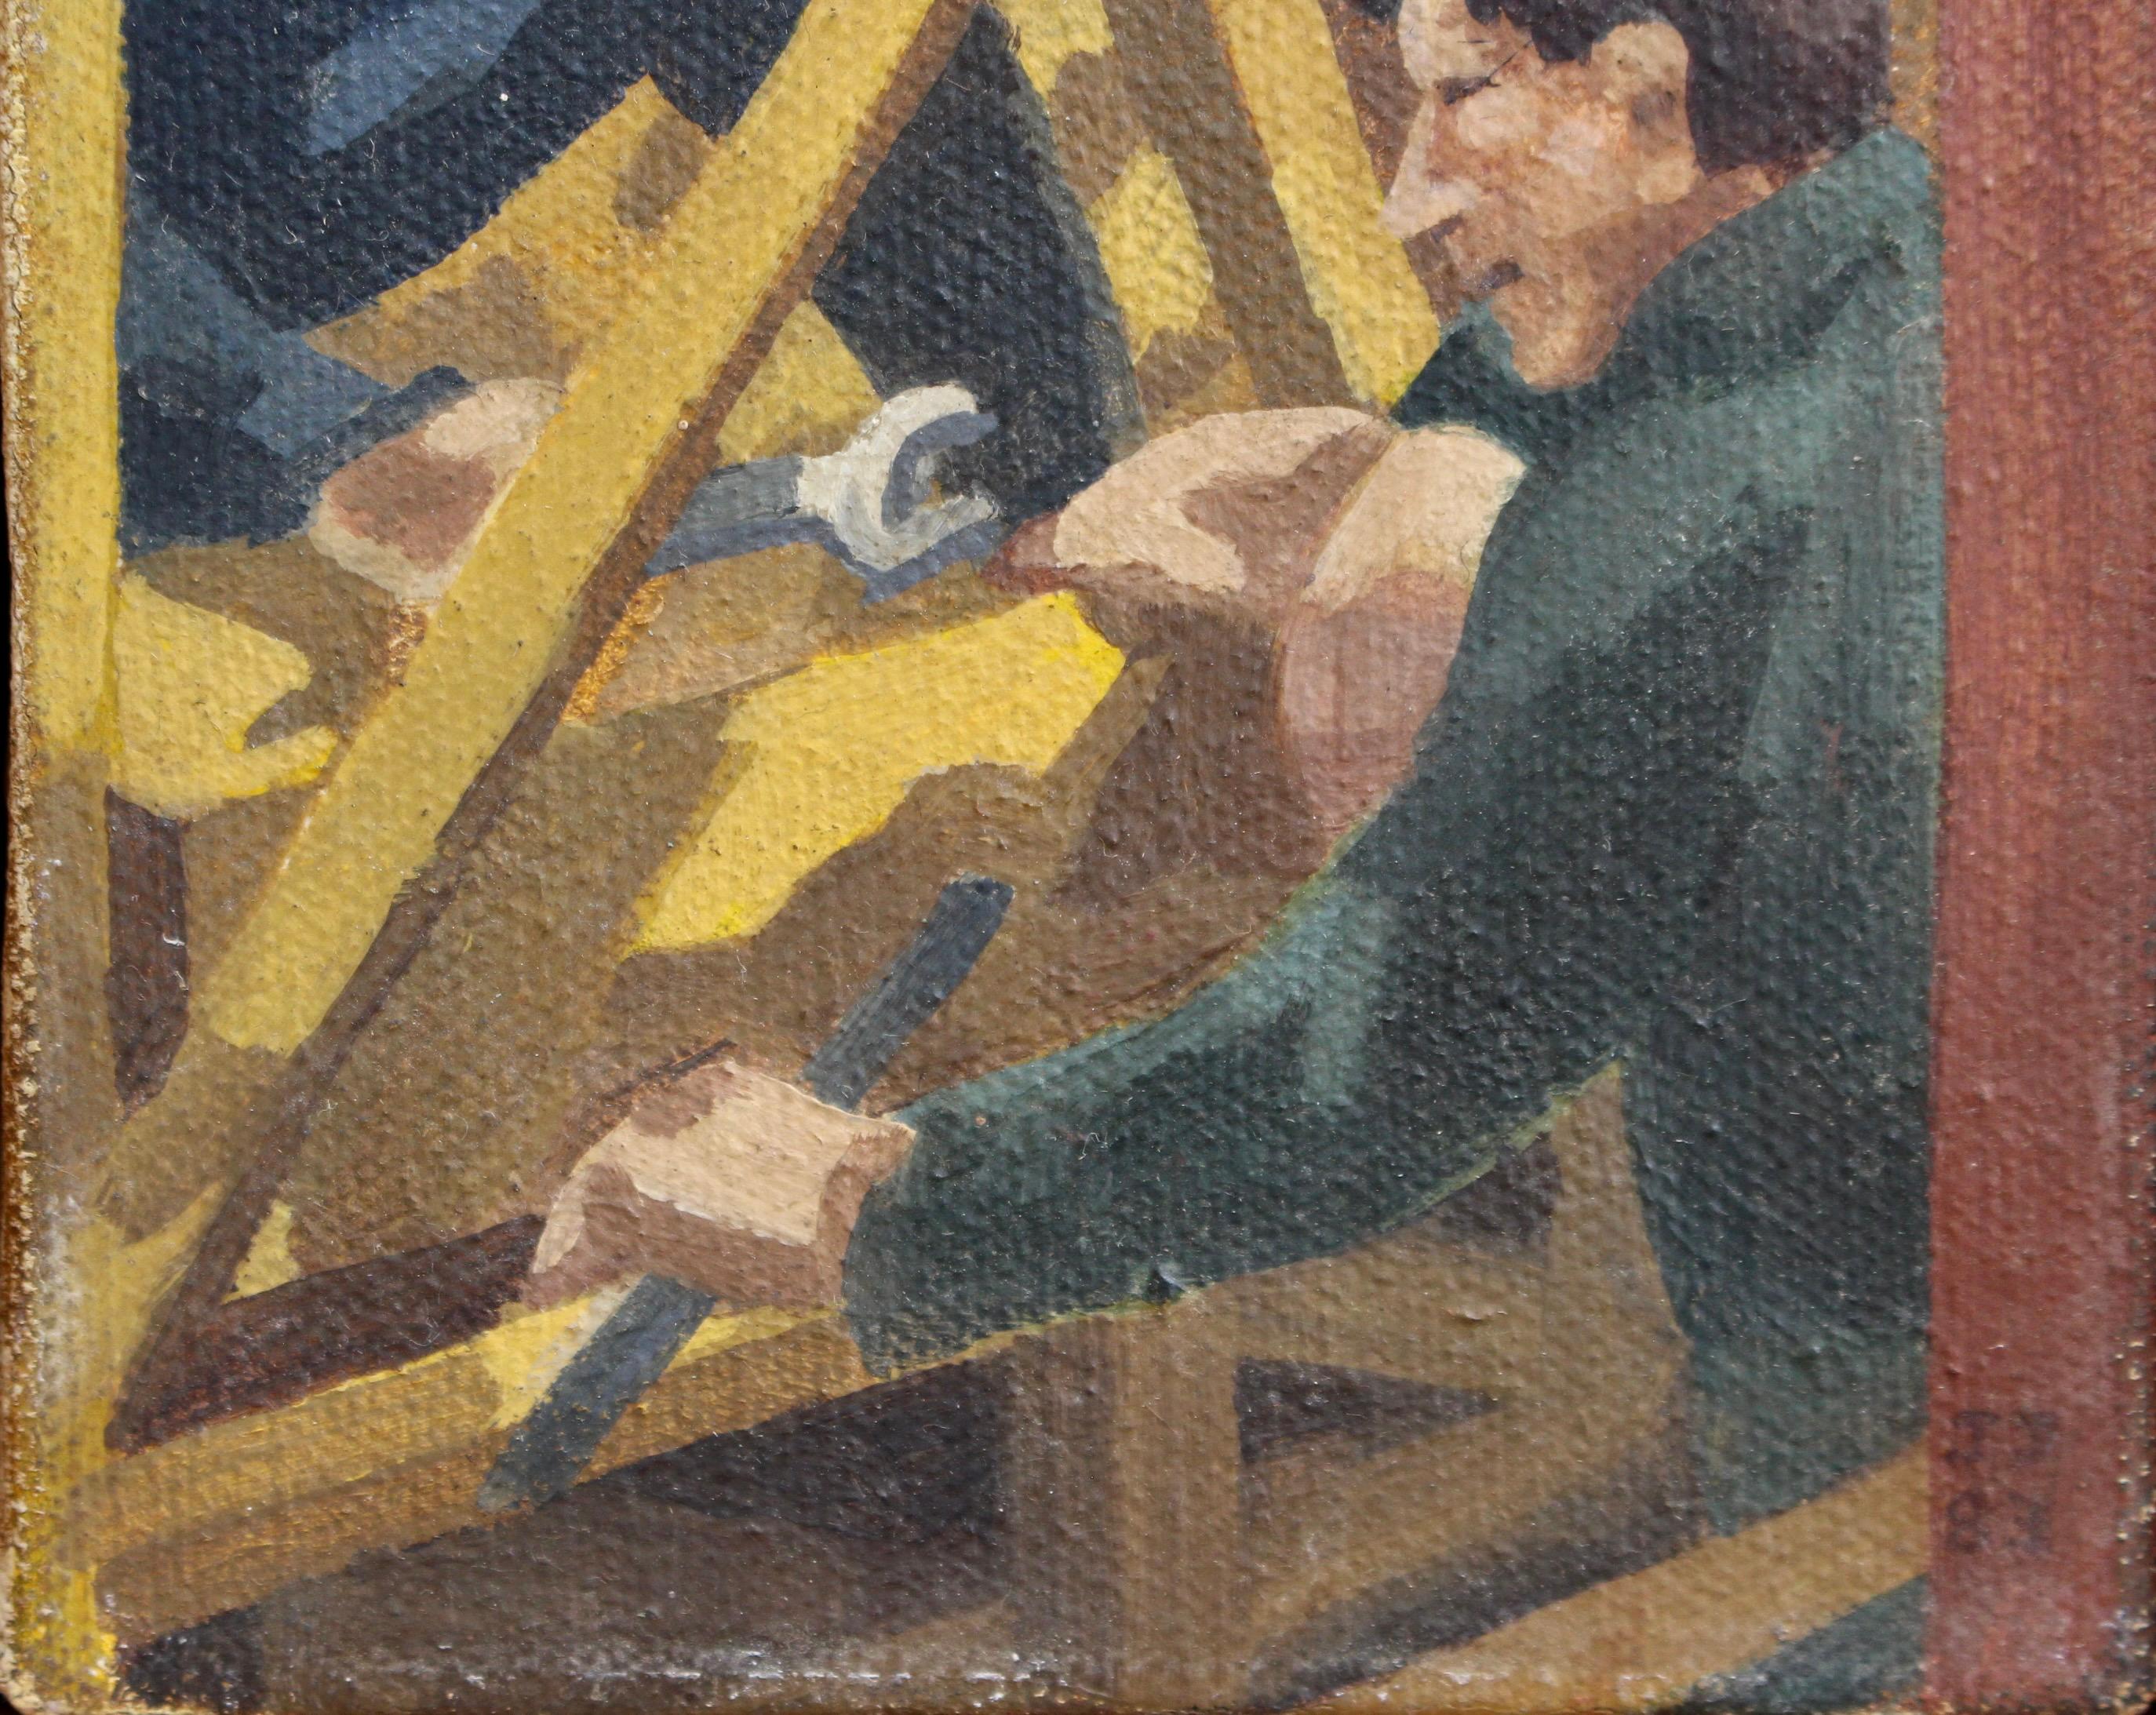 Men Working on a Concrete Crushing Machine - Futurist Painting by John James